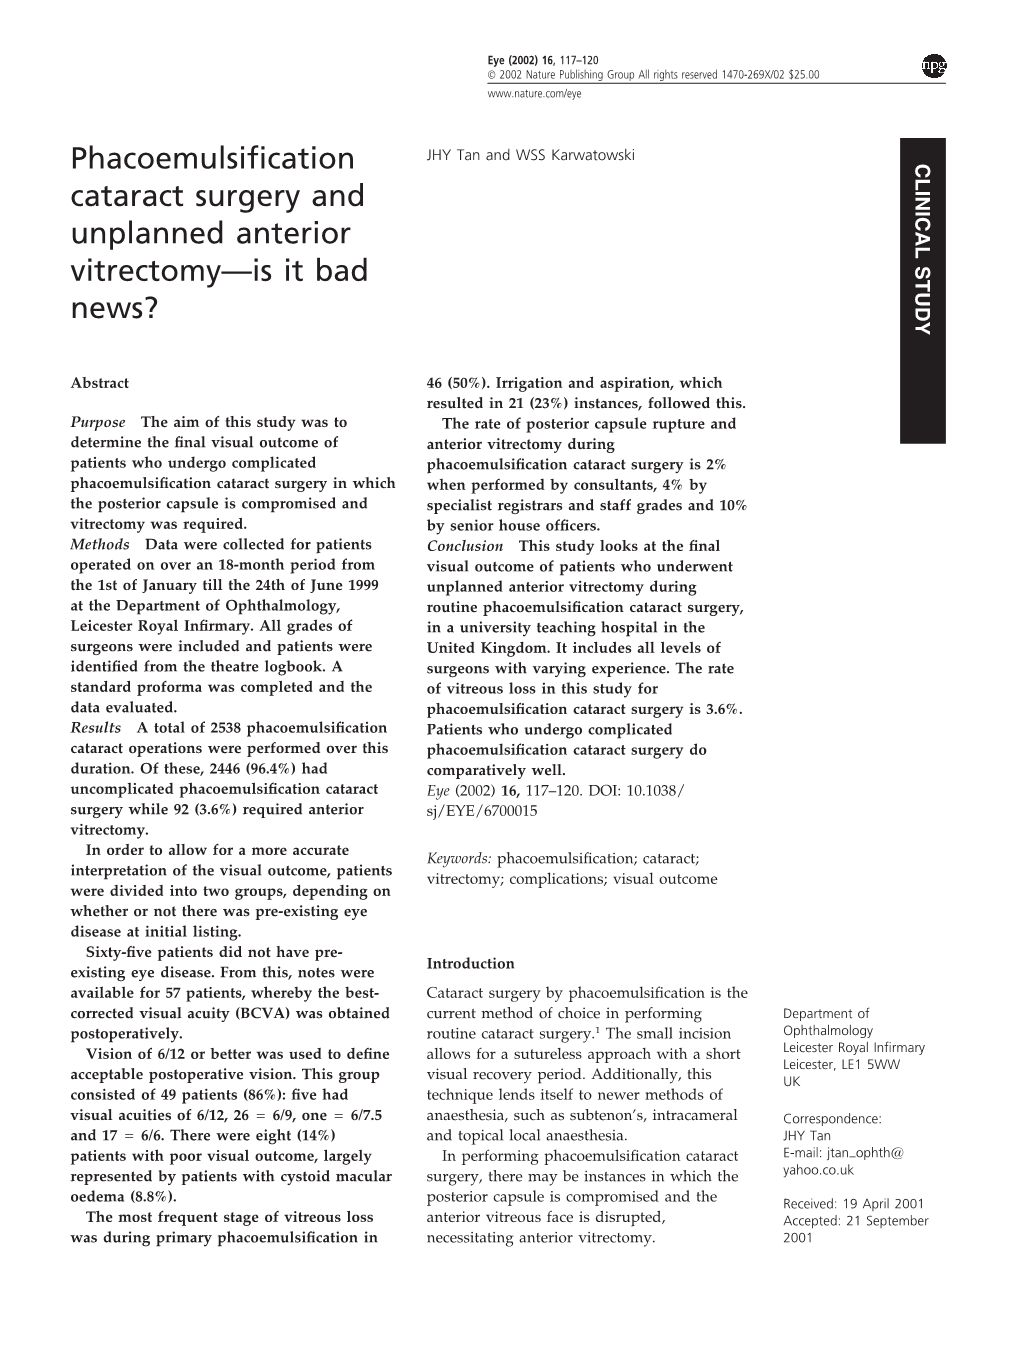 Phacoemulsification Cataract Surgery and Unplanned Anterior Vitrectomy